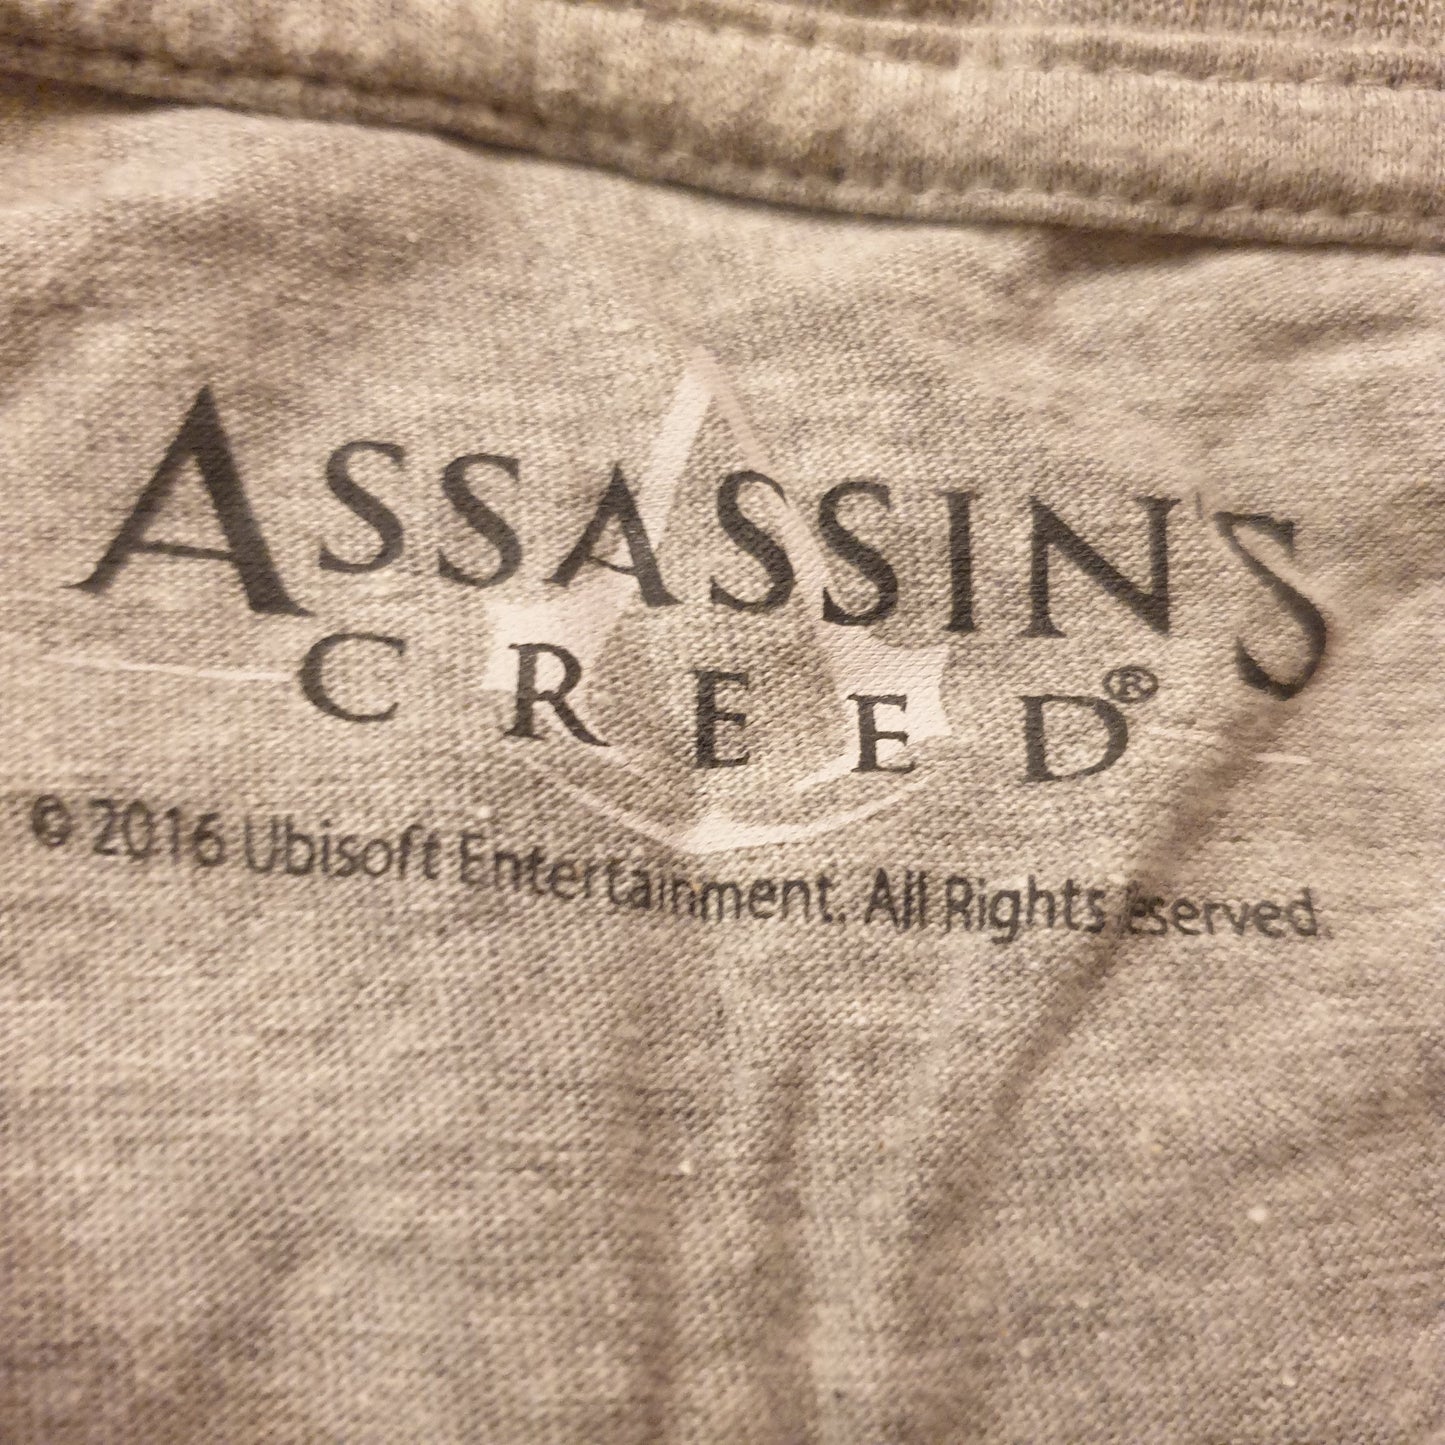 2016 Assassins Creed T-Shirt XS